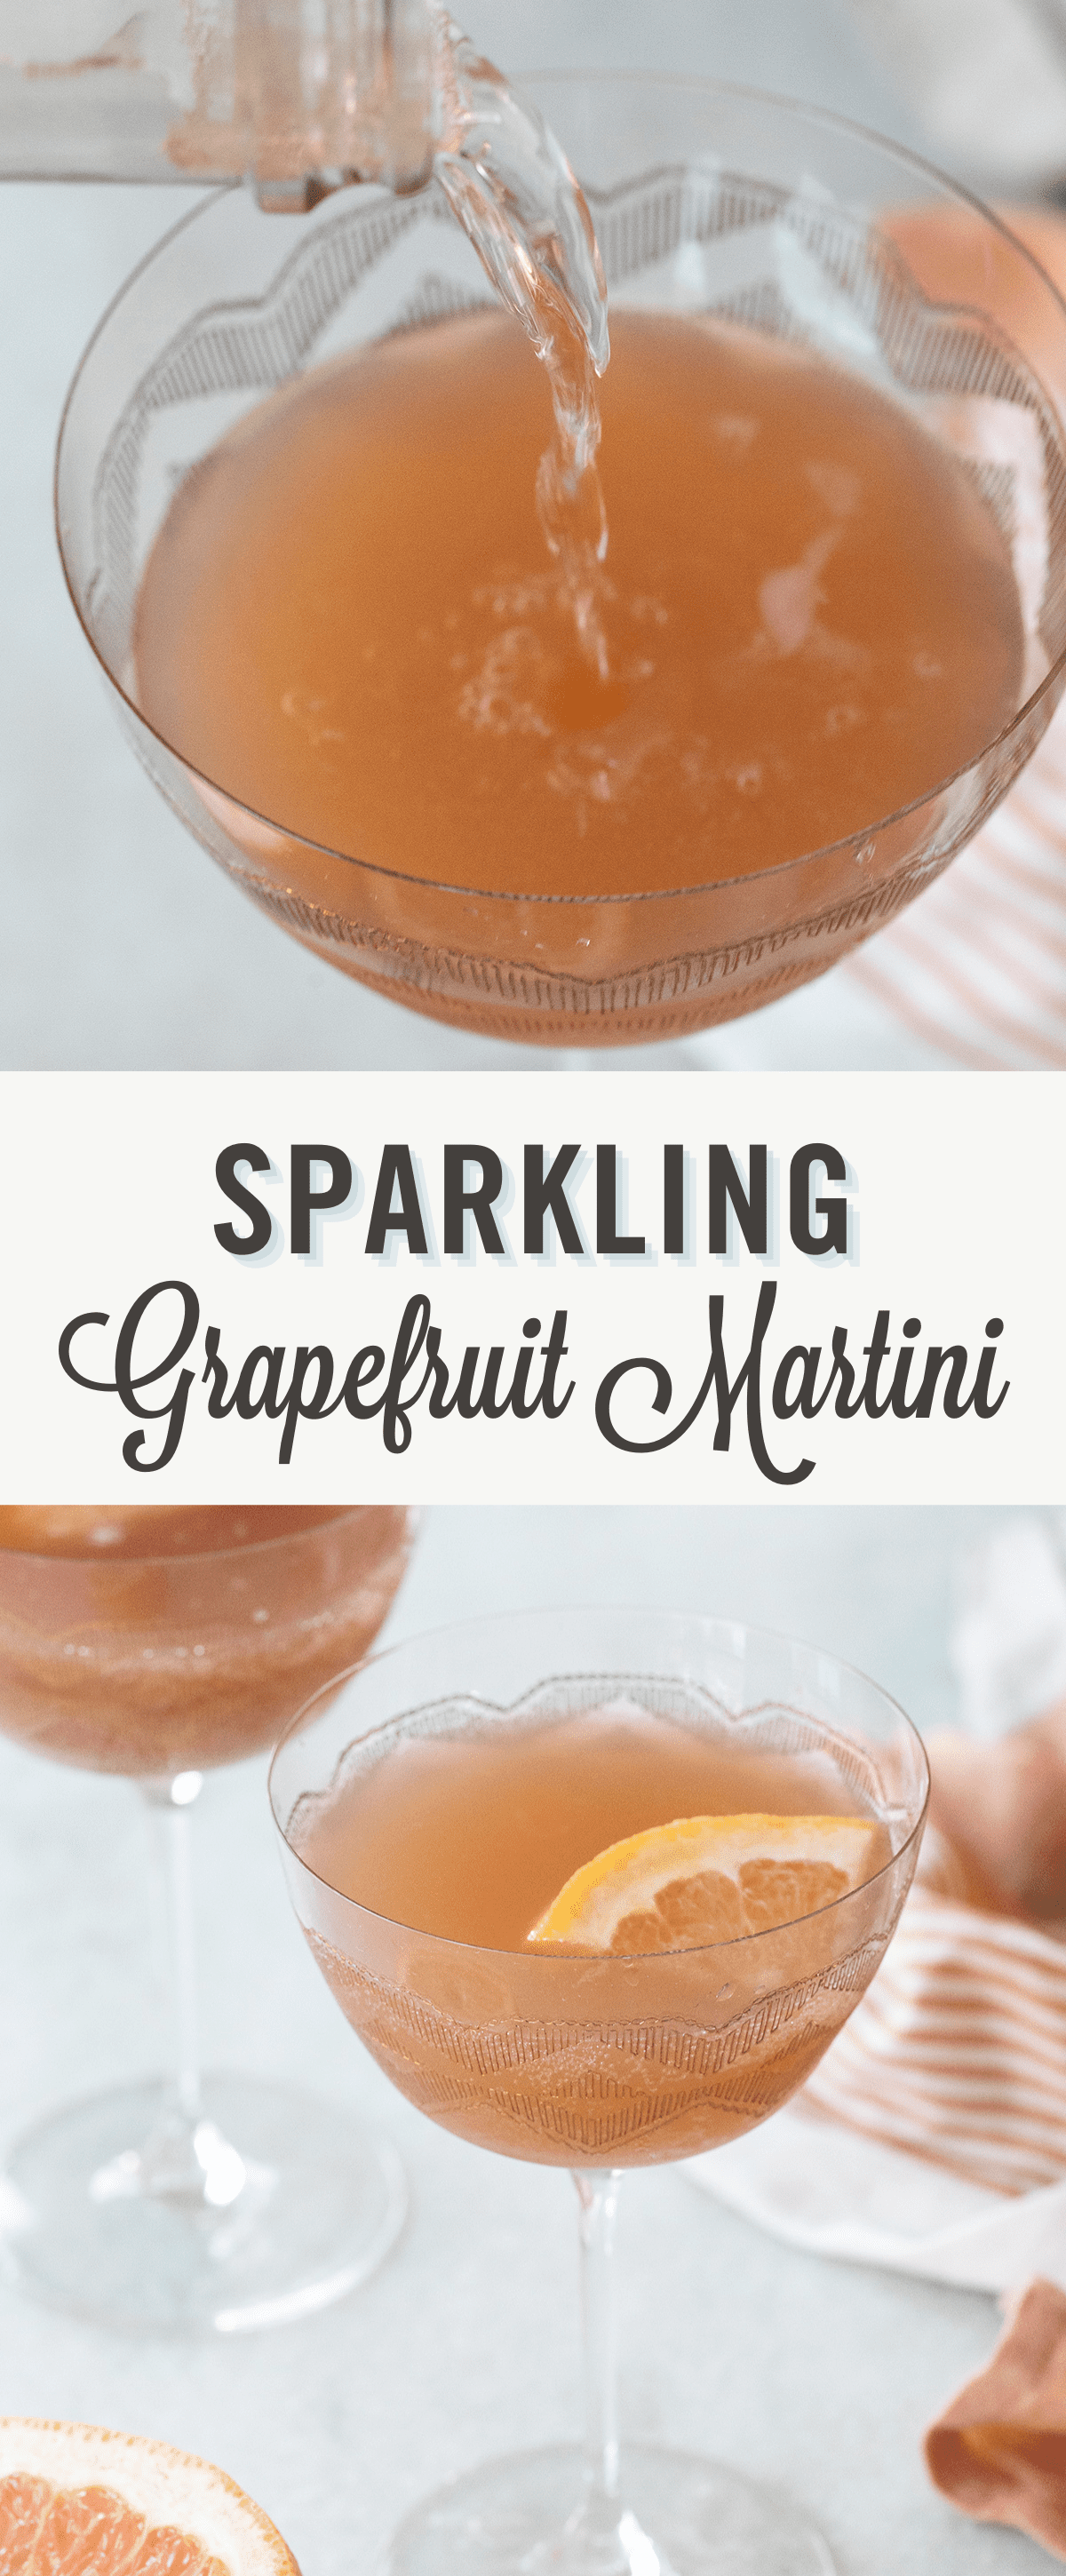 Sparkling martini.